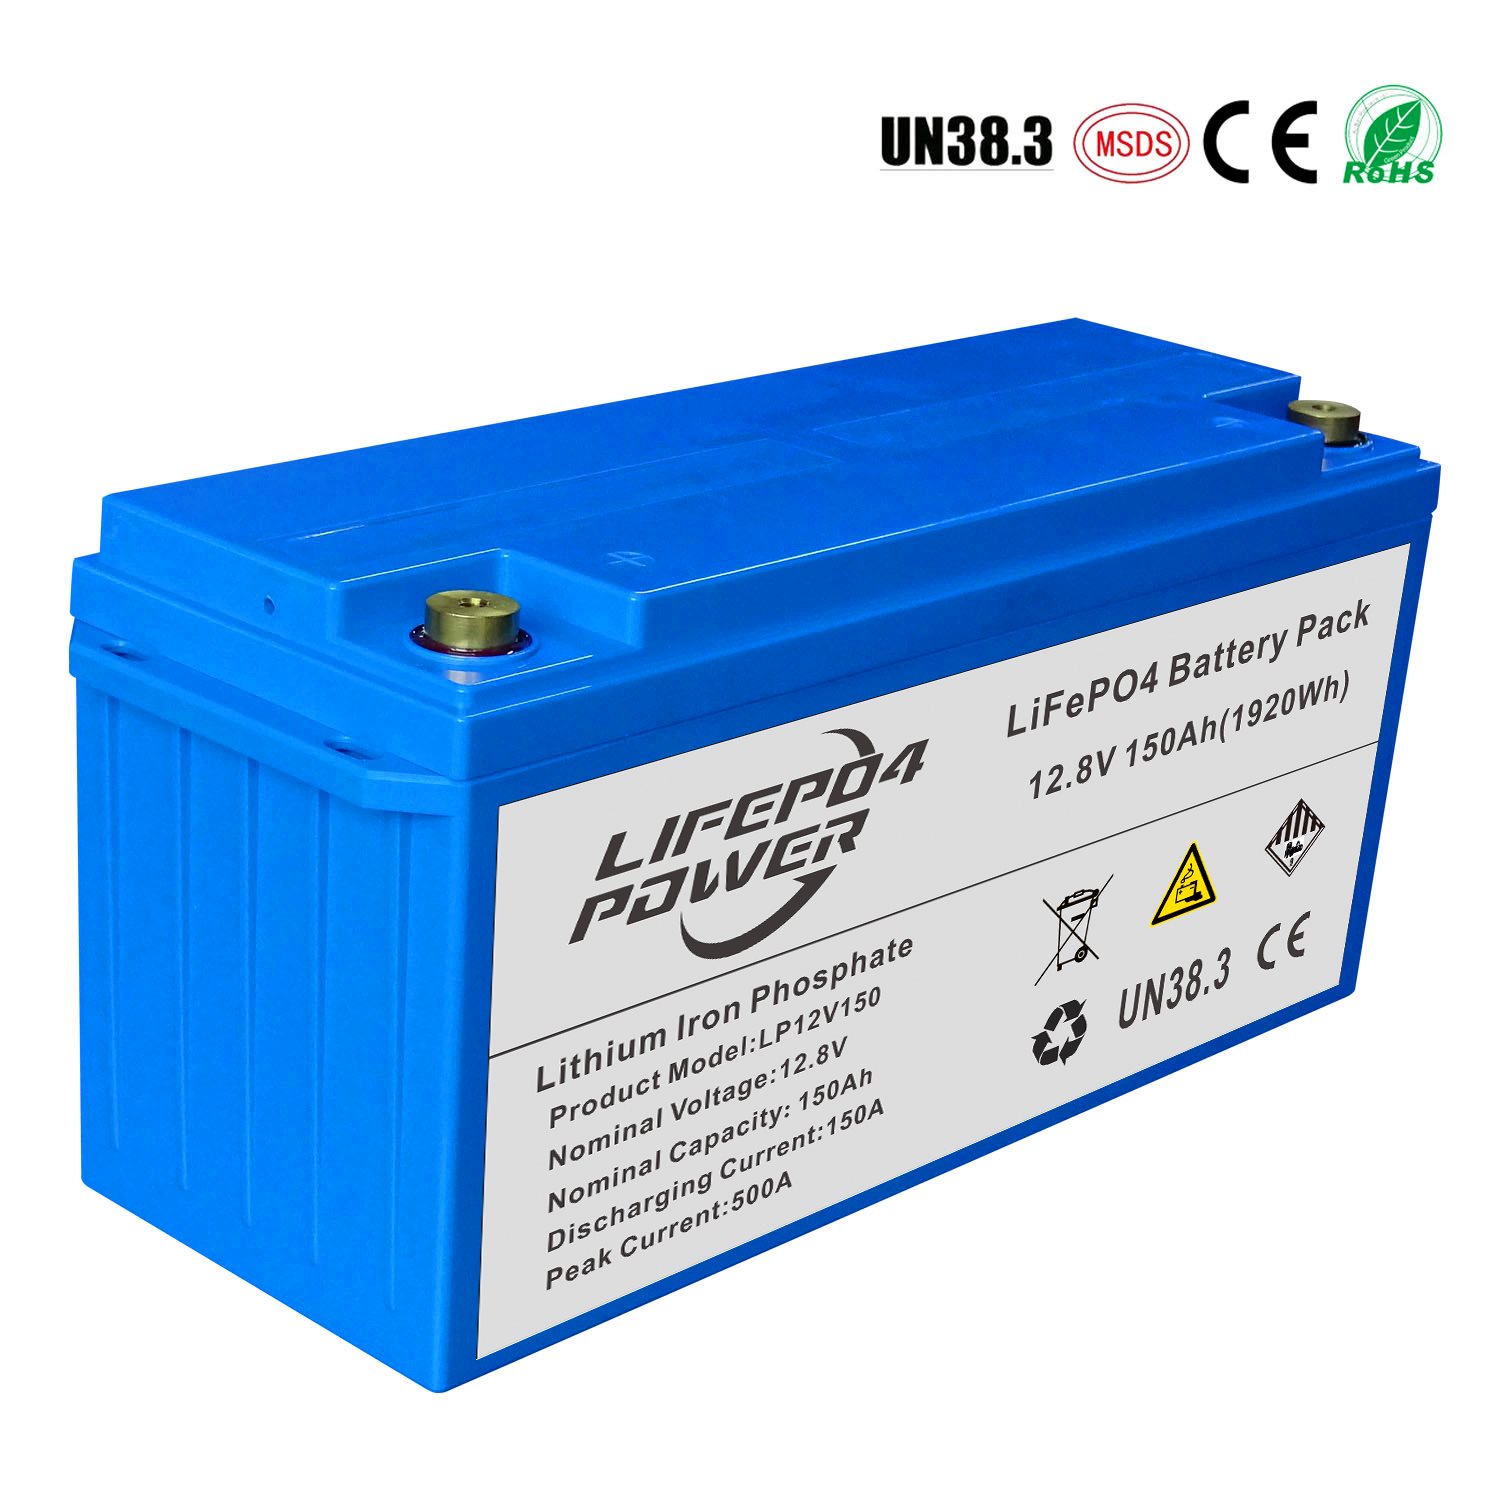 Lithium-ferofosfátová baterie 12V 150Ah